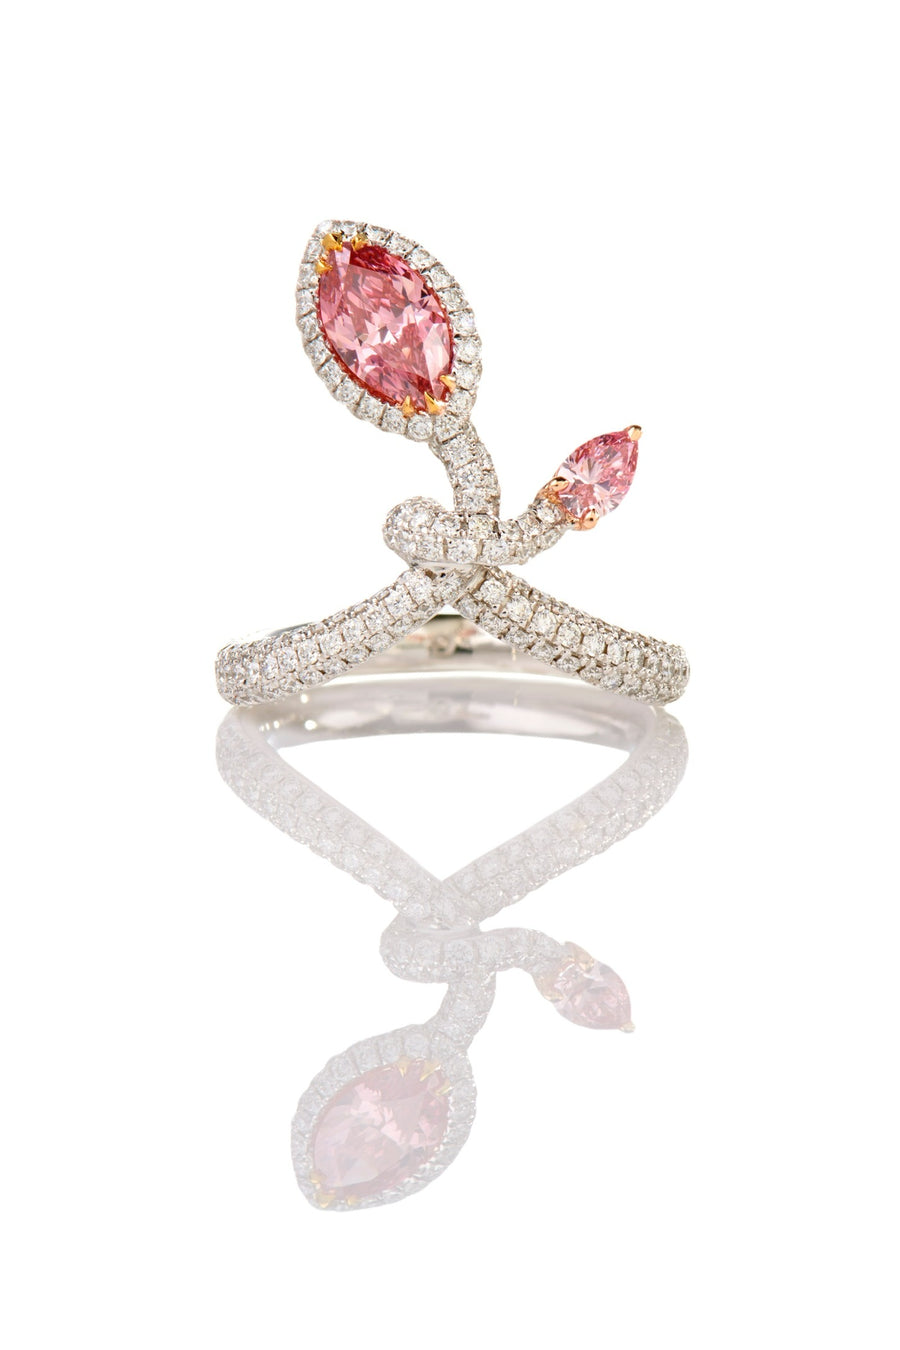 Vivid pink diamond marquis ring